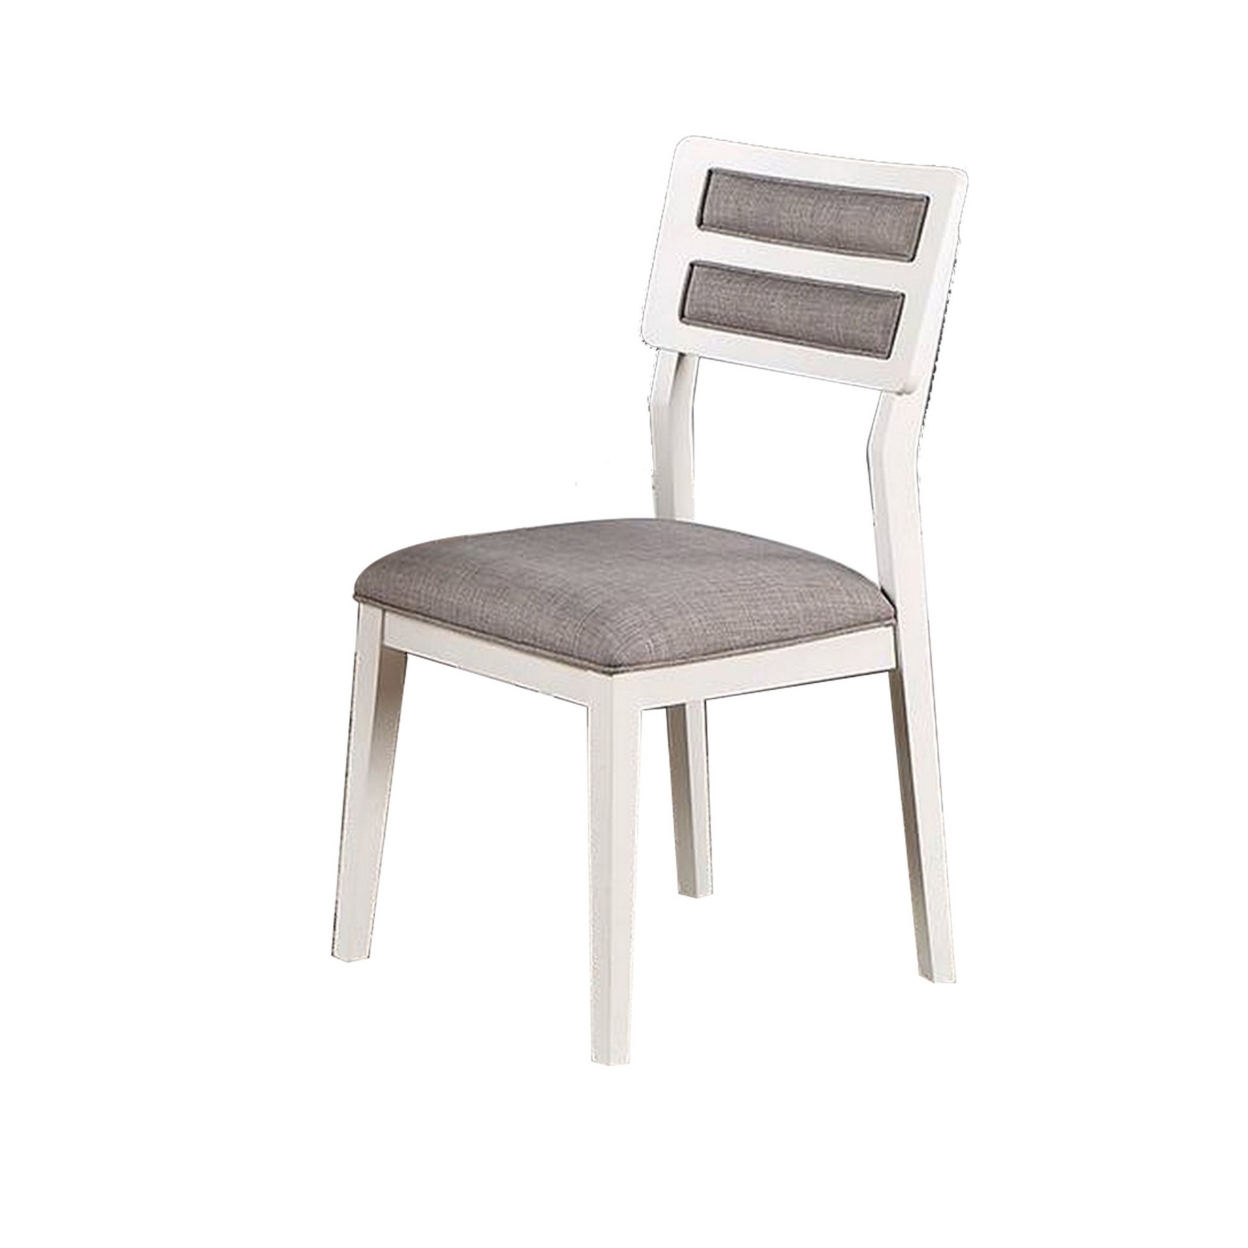 Kya 21 Inch 2 Tone Dining Chair, Ladder Back, Gray Seat, Set Of 2, White- Saltoro Sherpi